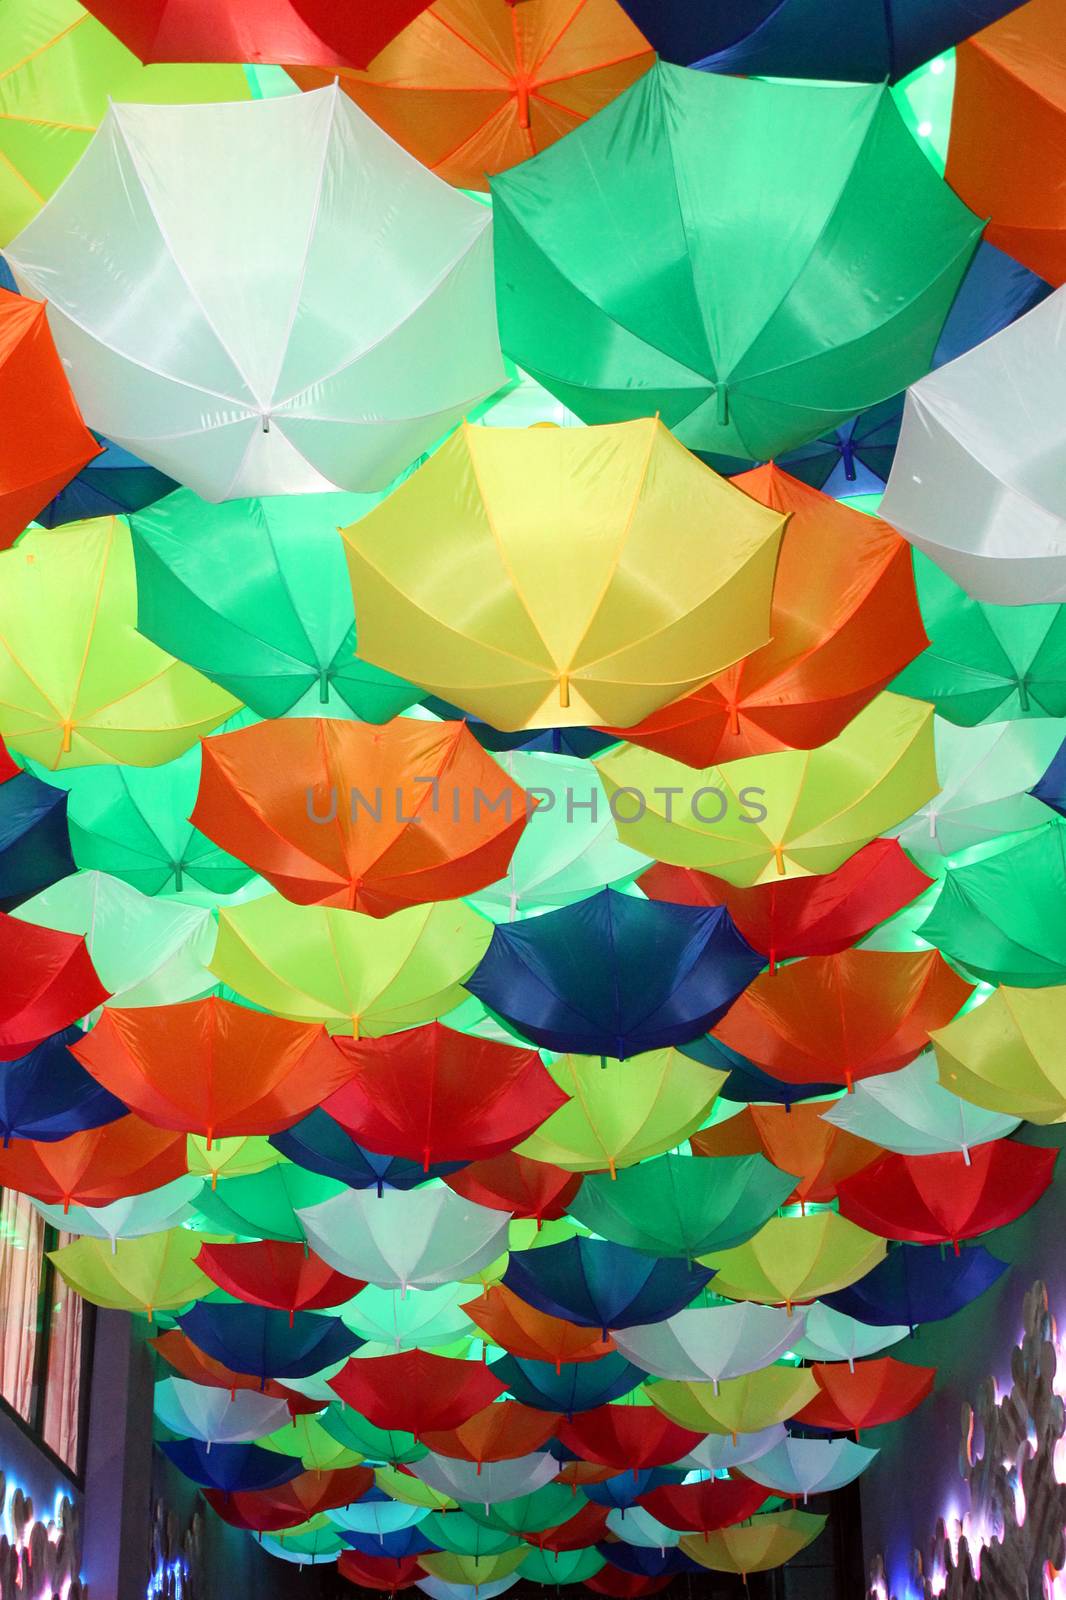 Background of colorful umbrellas